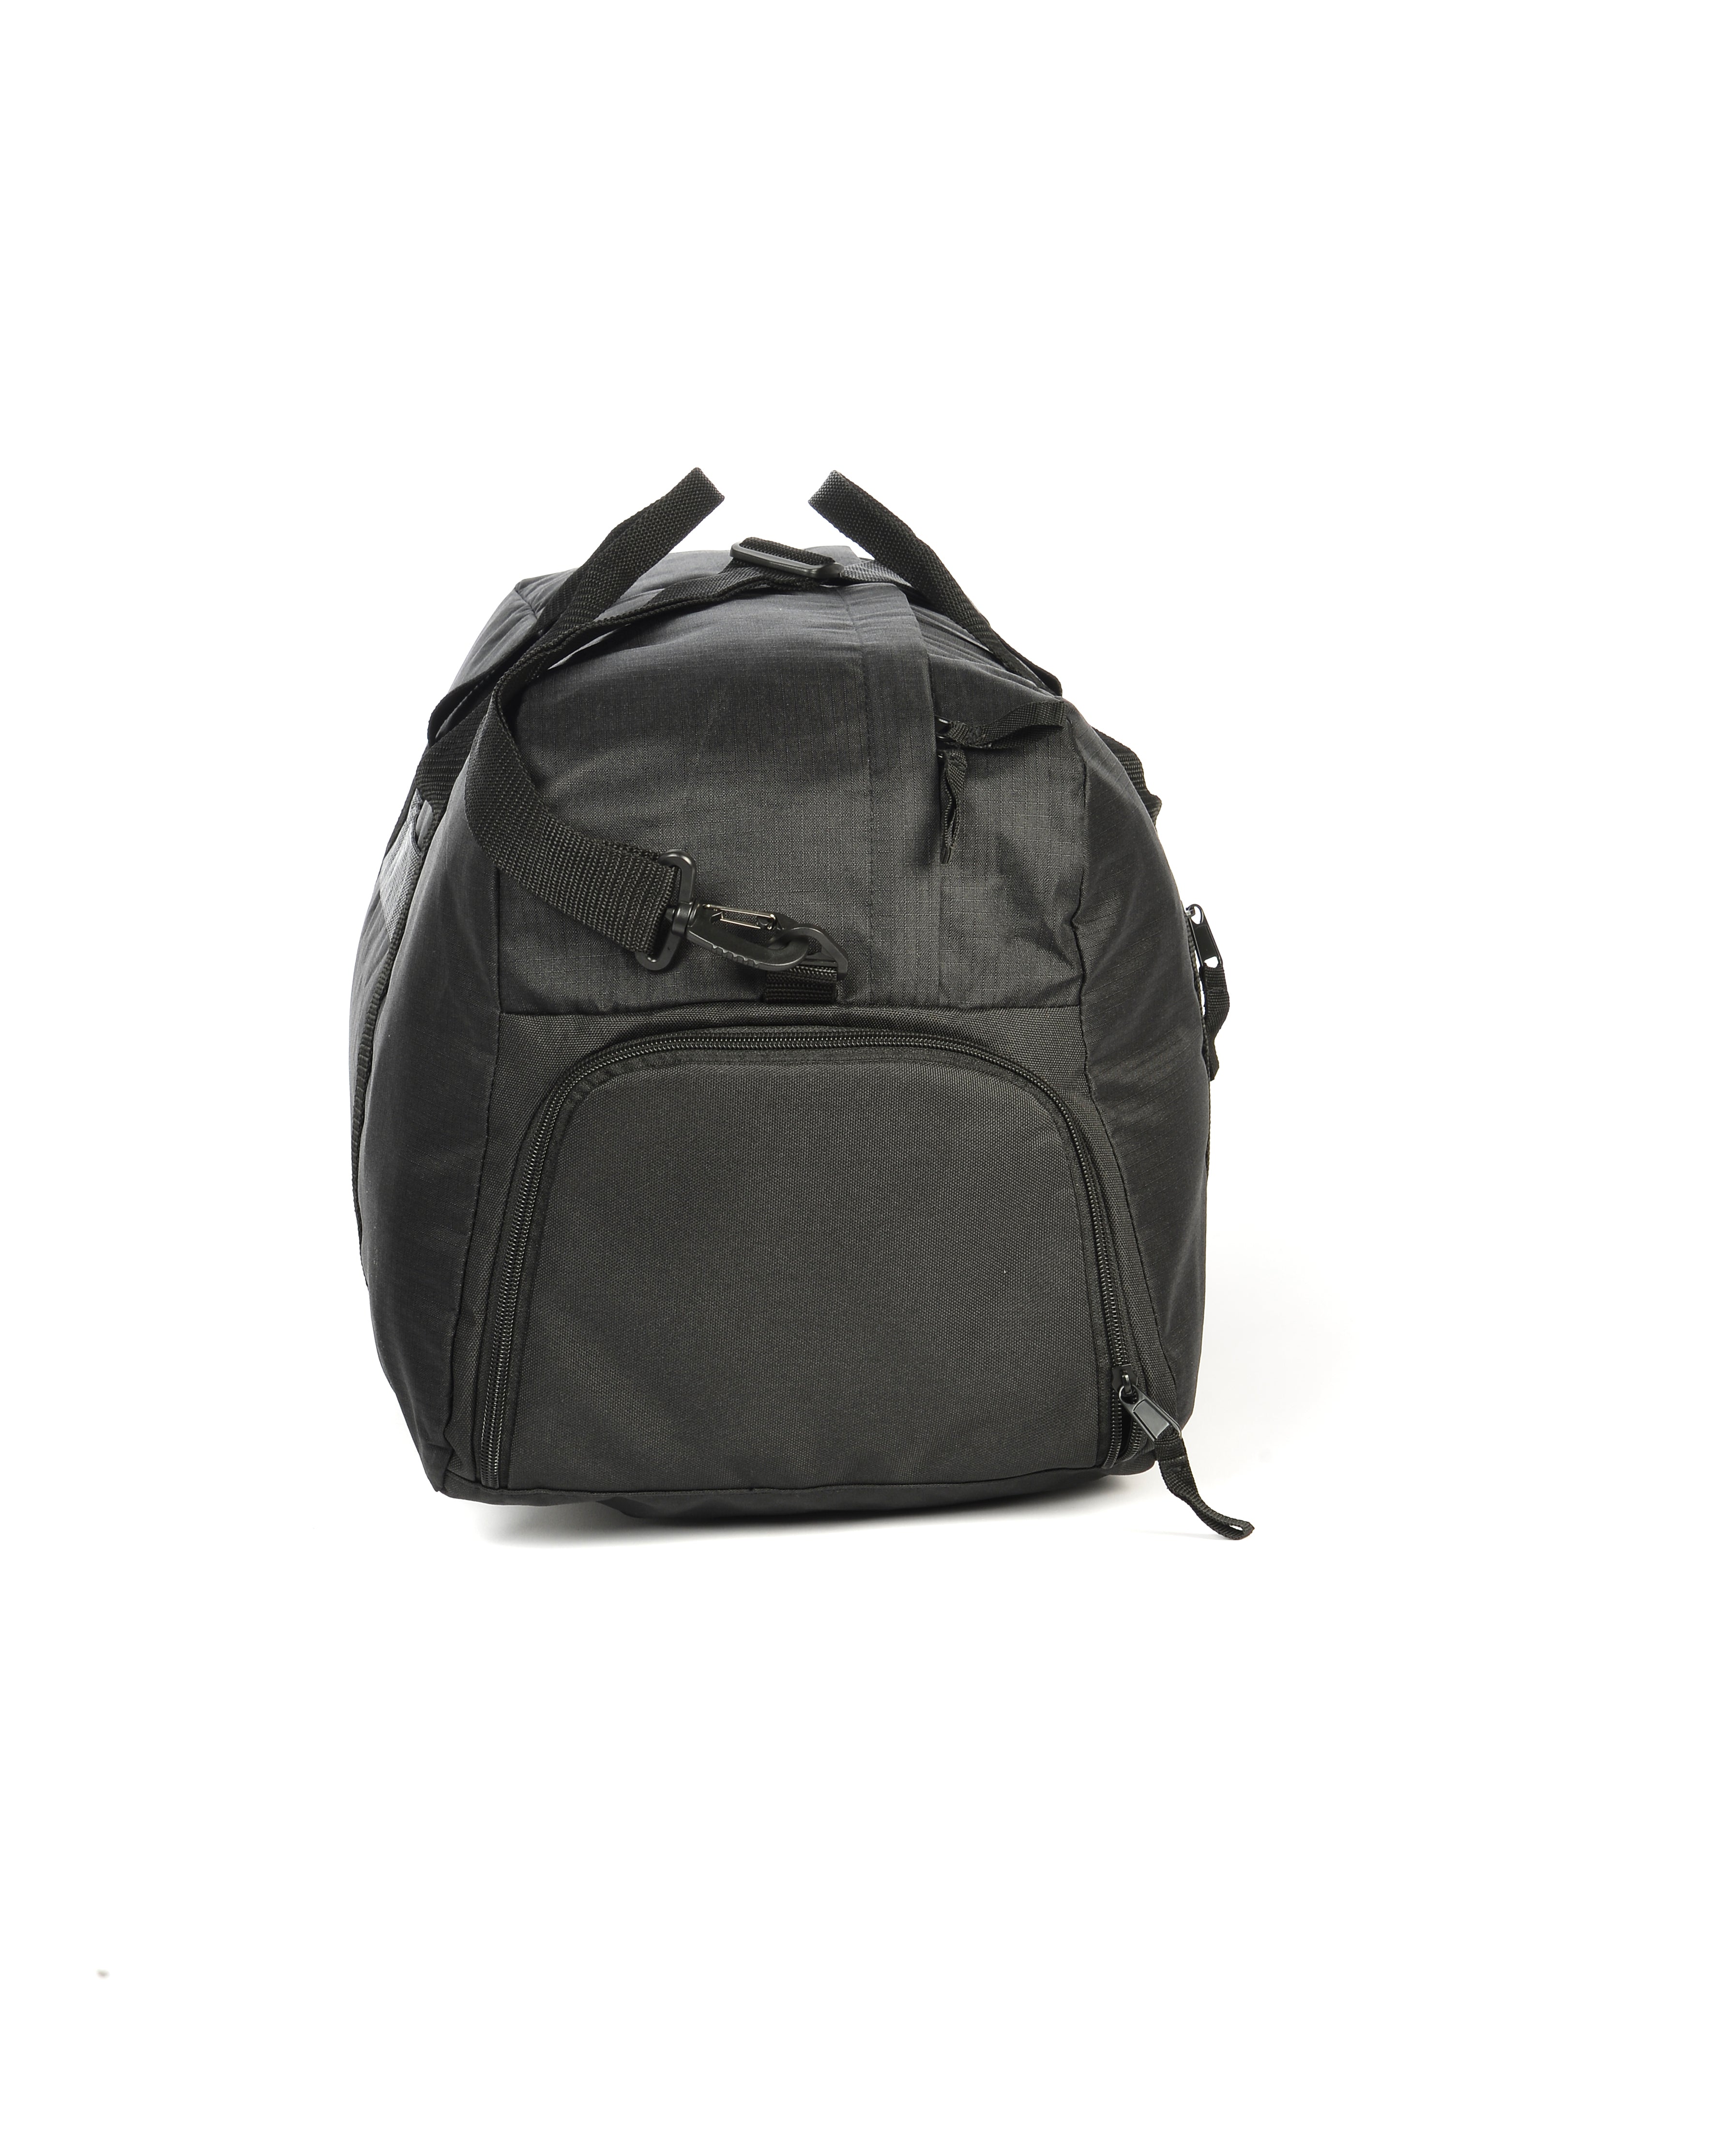 Rugged Foldable Bag 92L Black